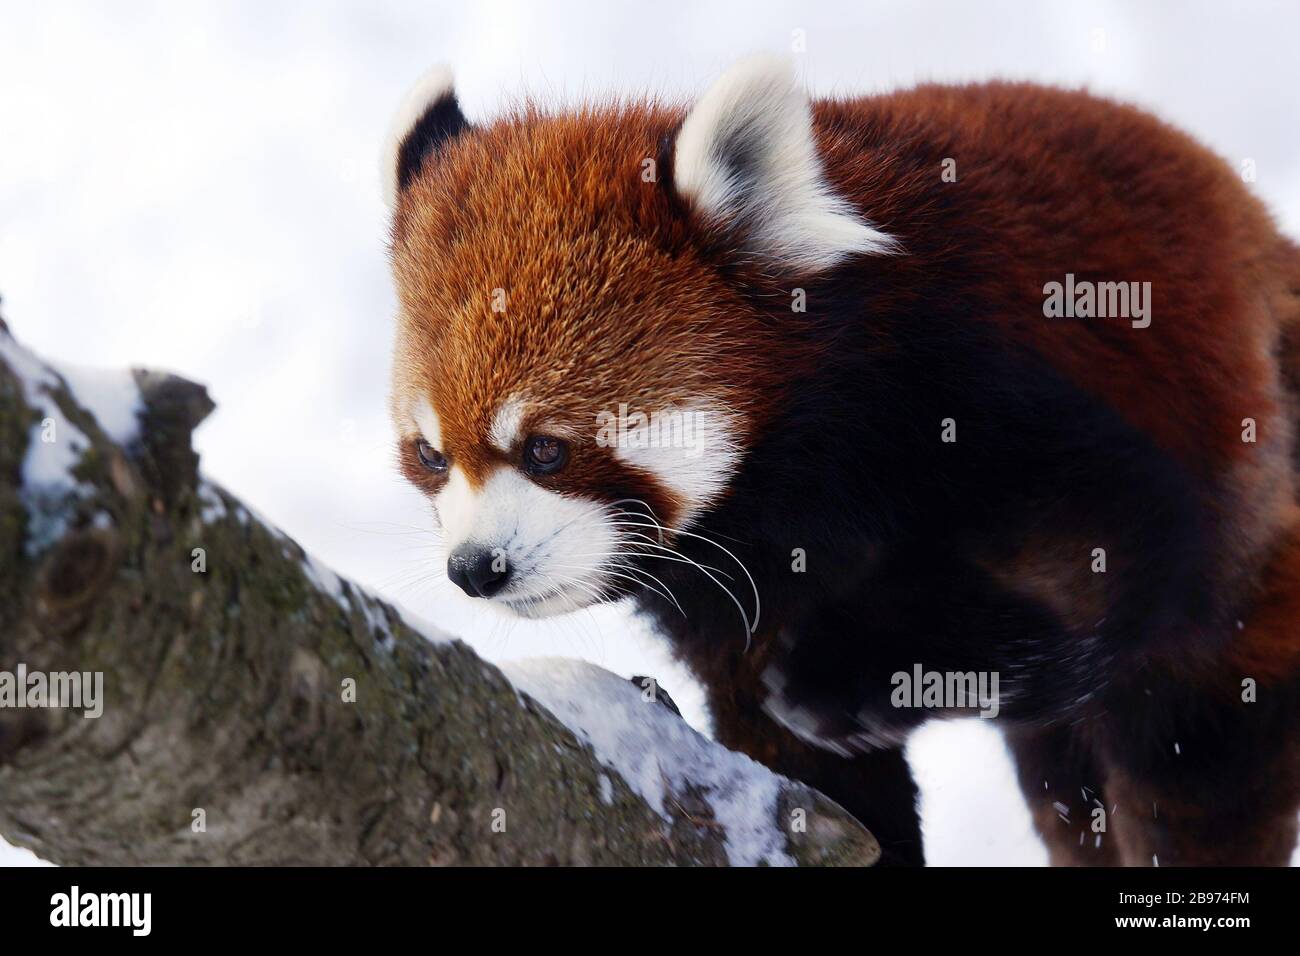 Red panda,Ailurus fulgens, walking on tree covered in snow Stock Photo